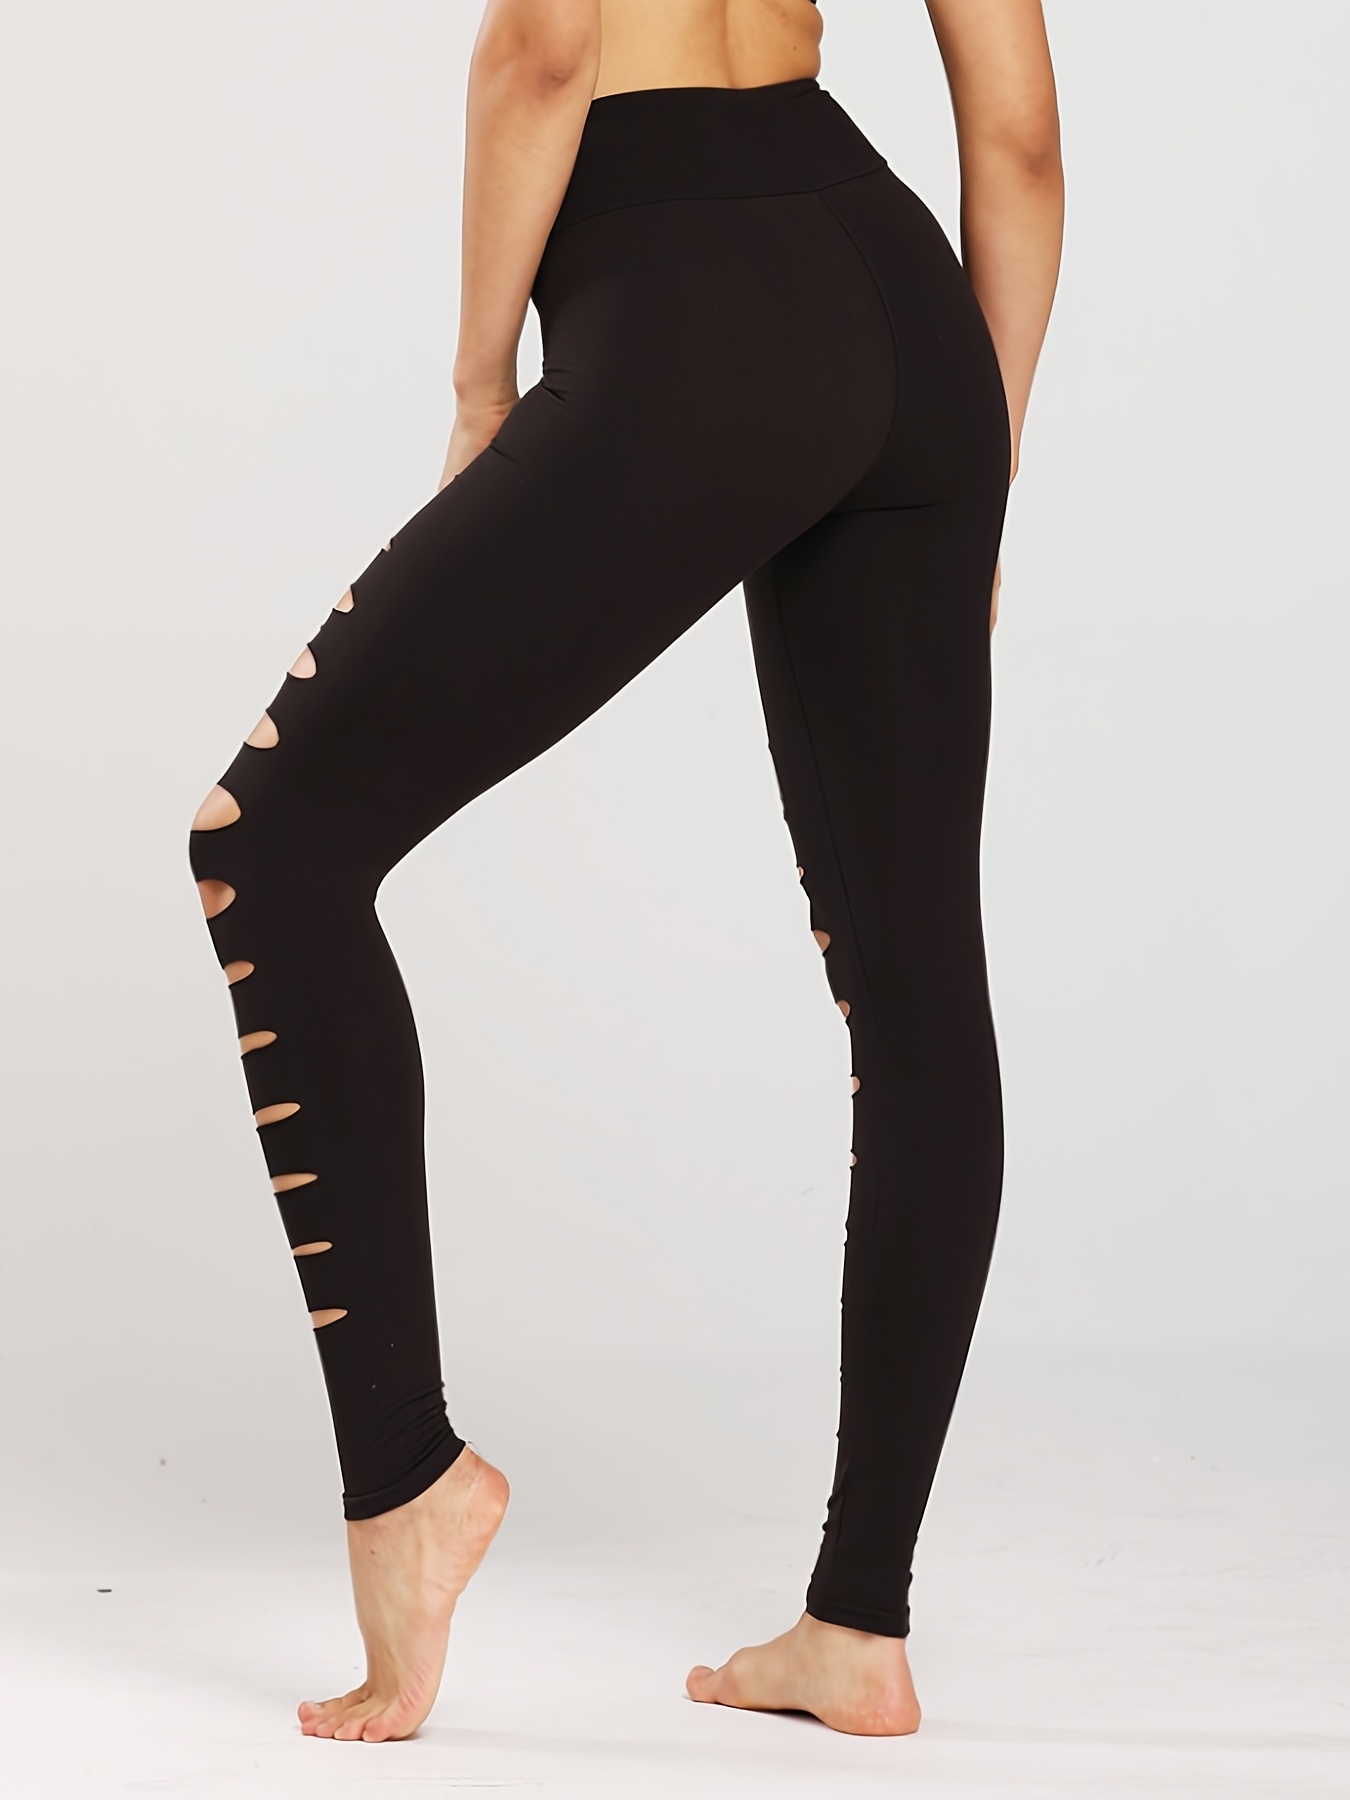 Womens Elastic Hollow Out High Waist Leggings Tight Sports Casual Yoga  Pants Yoga Pants Black XL 